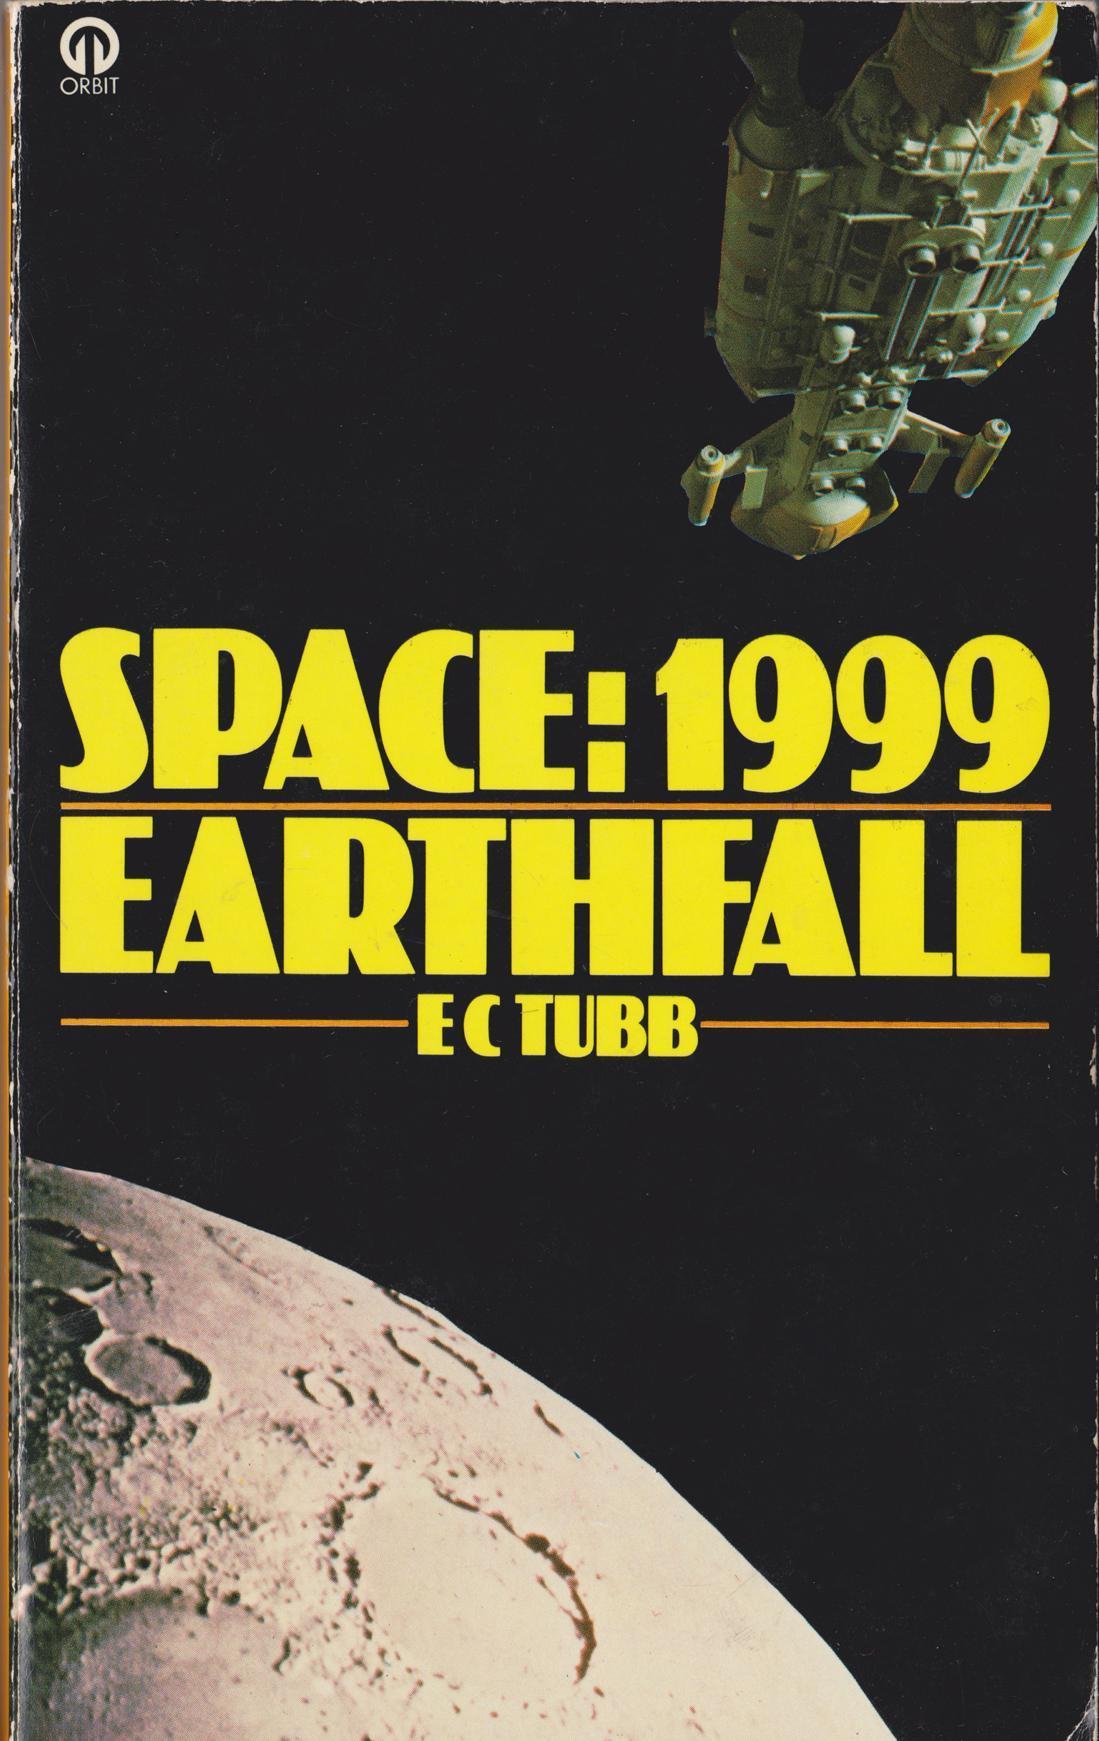 Space: 1999 - Earthfall by E.C. Tubb (Orbit Edition, 1977)